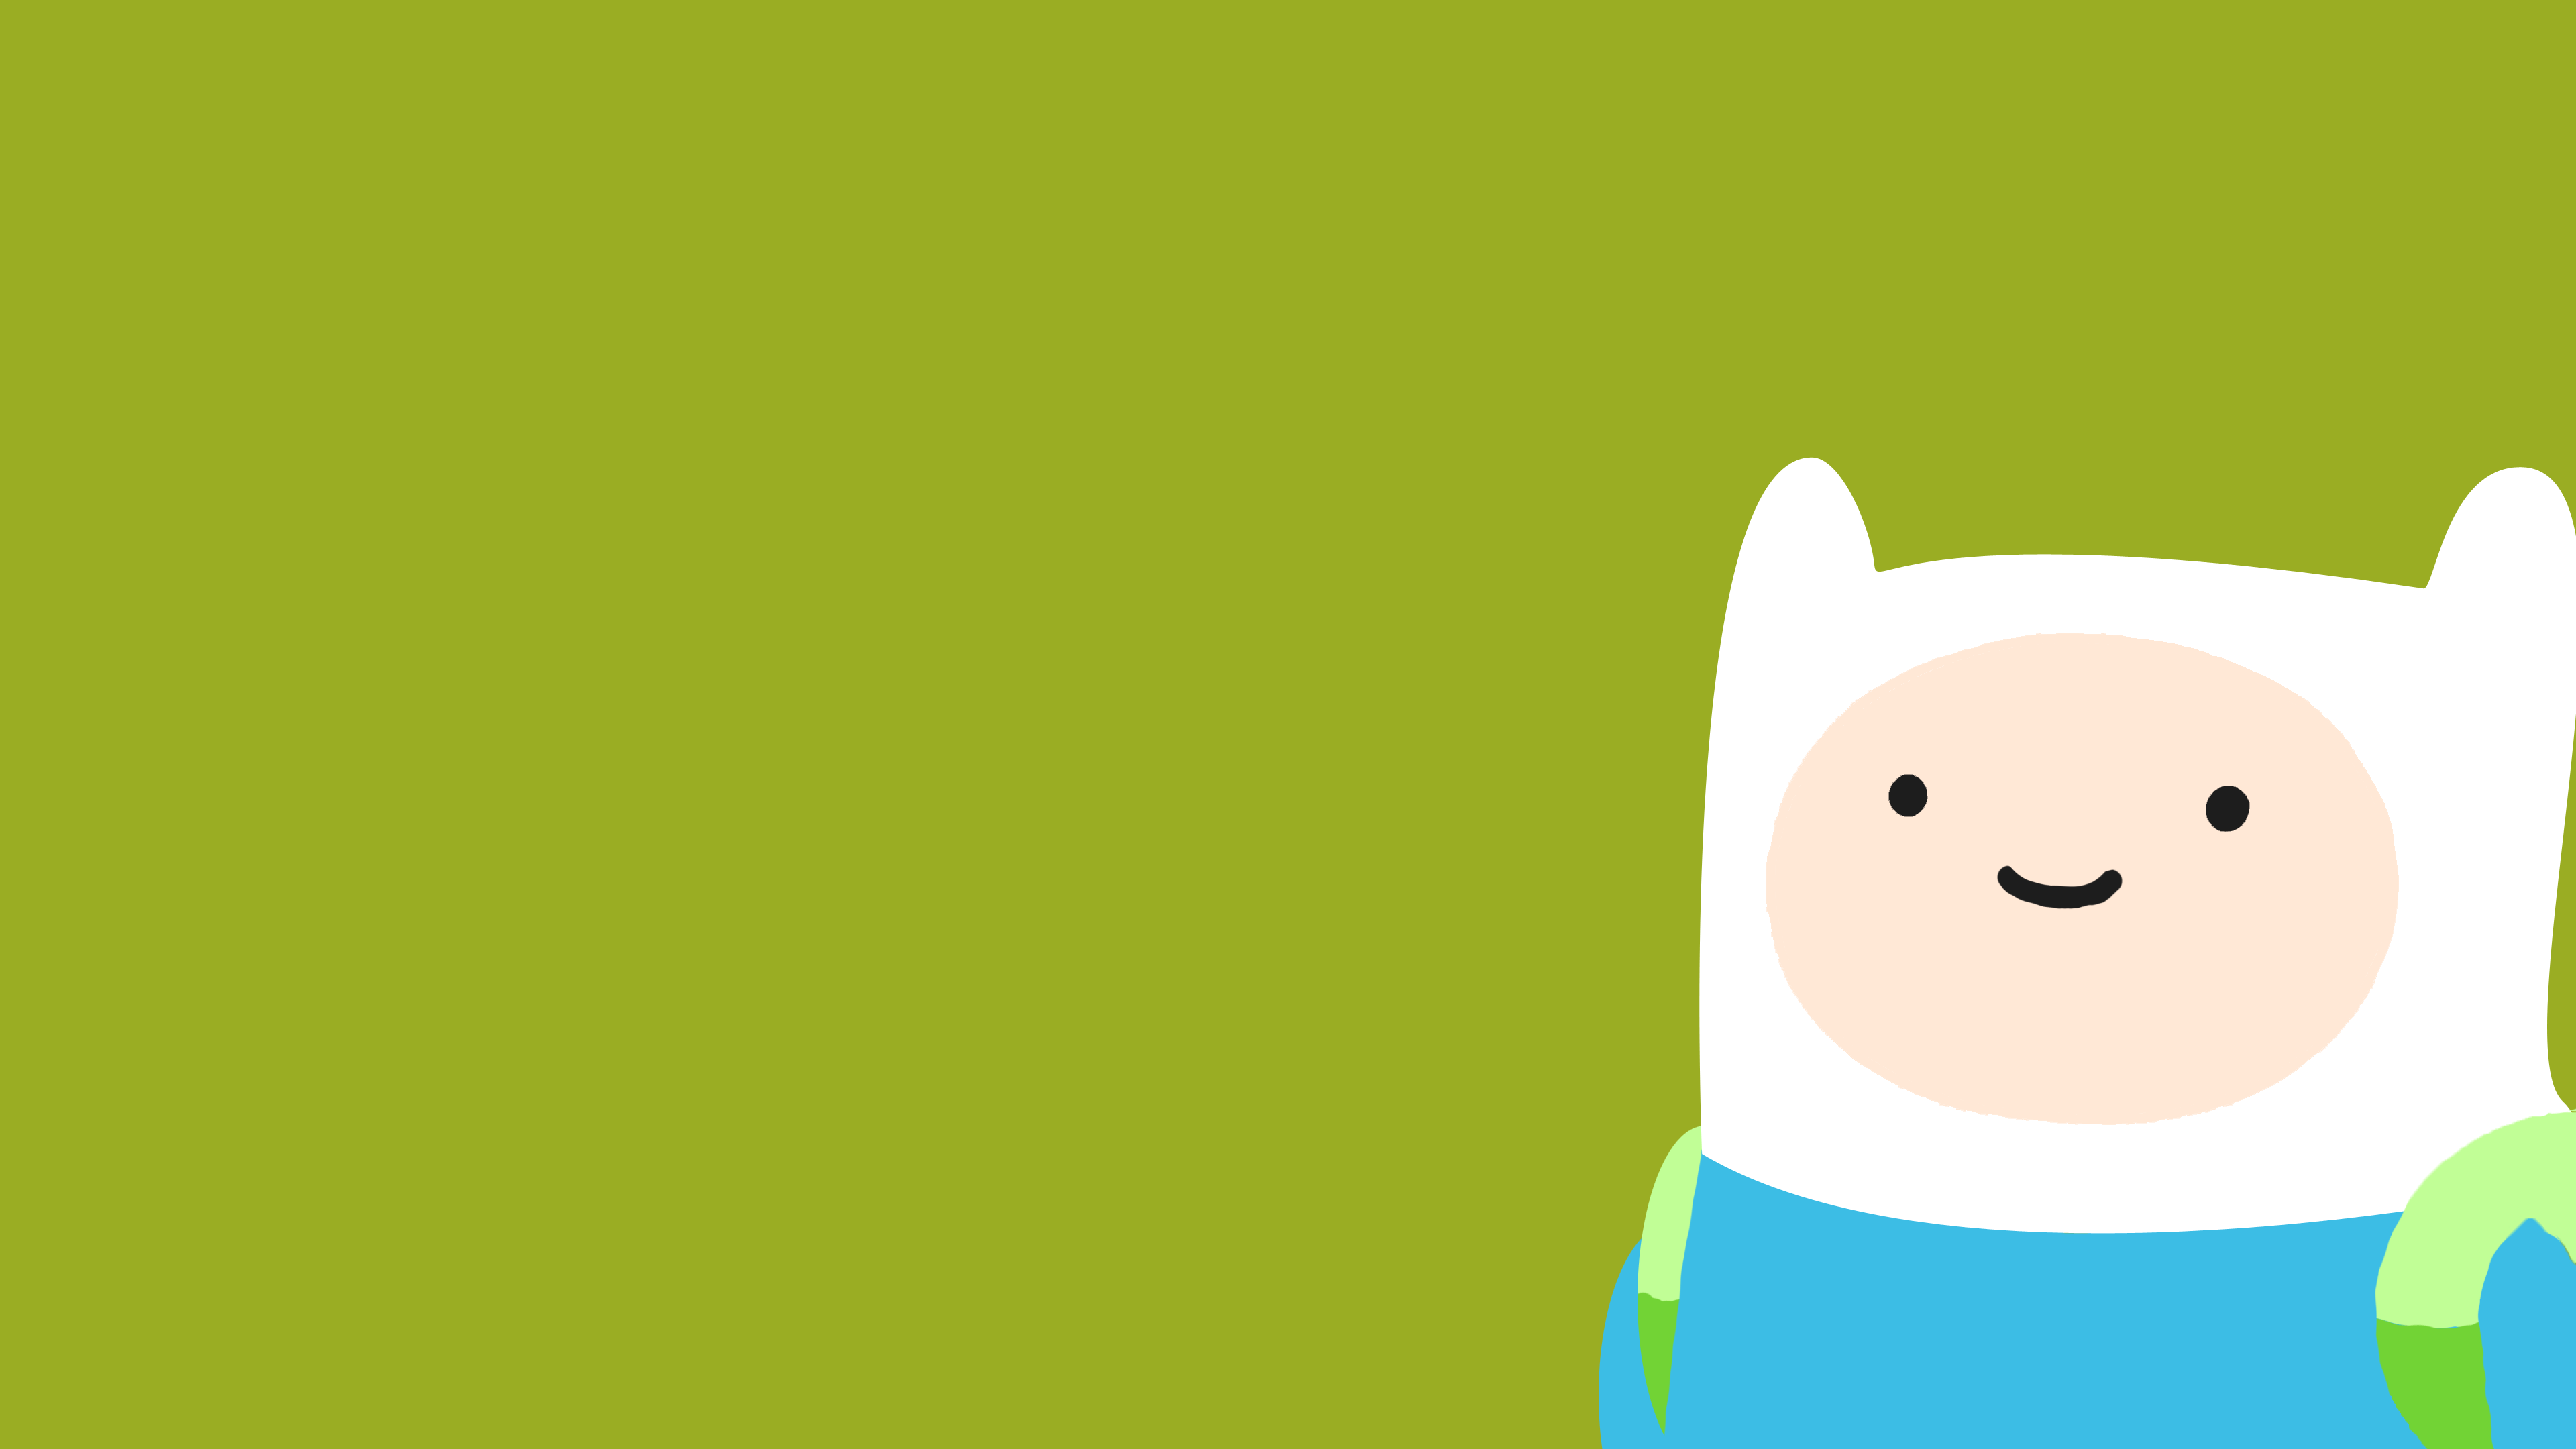 Desktop Wallpaper Cartoon Adventure Time Jake And Finn Hd Image  Picture Background Ba4e7e